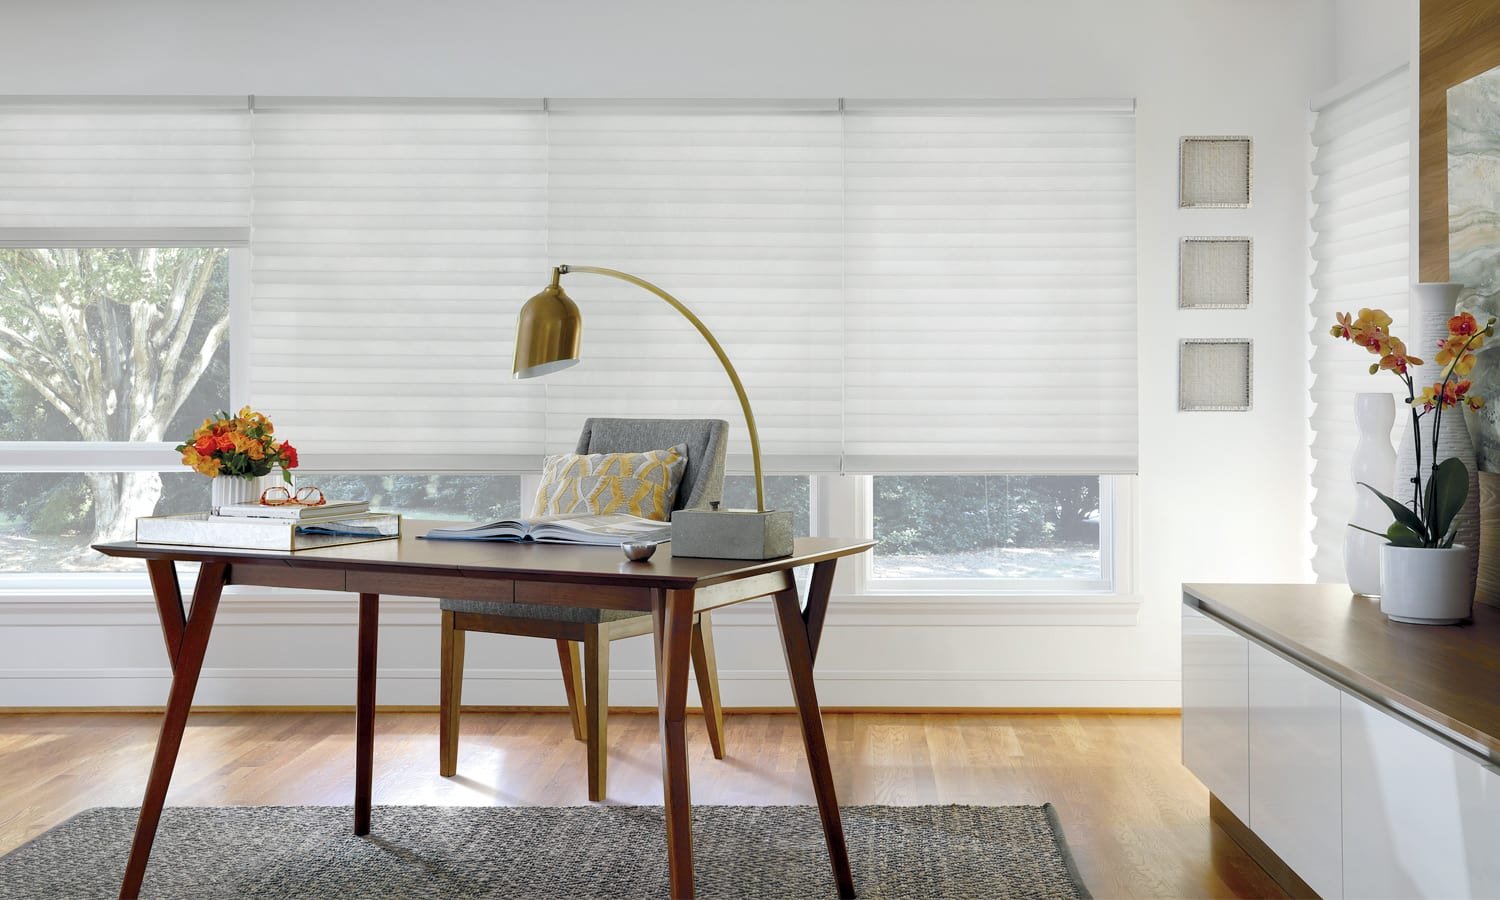 Blinds for Windows  Window Blind Design Ideas for Homes – Livspace